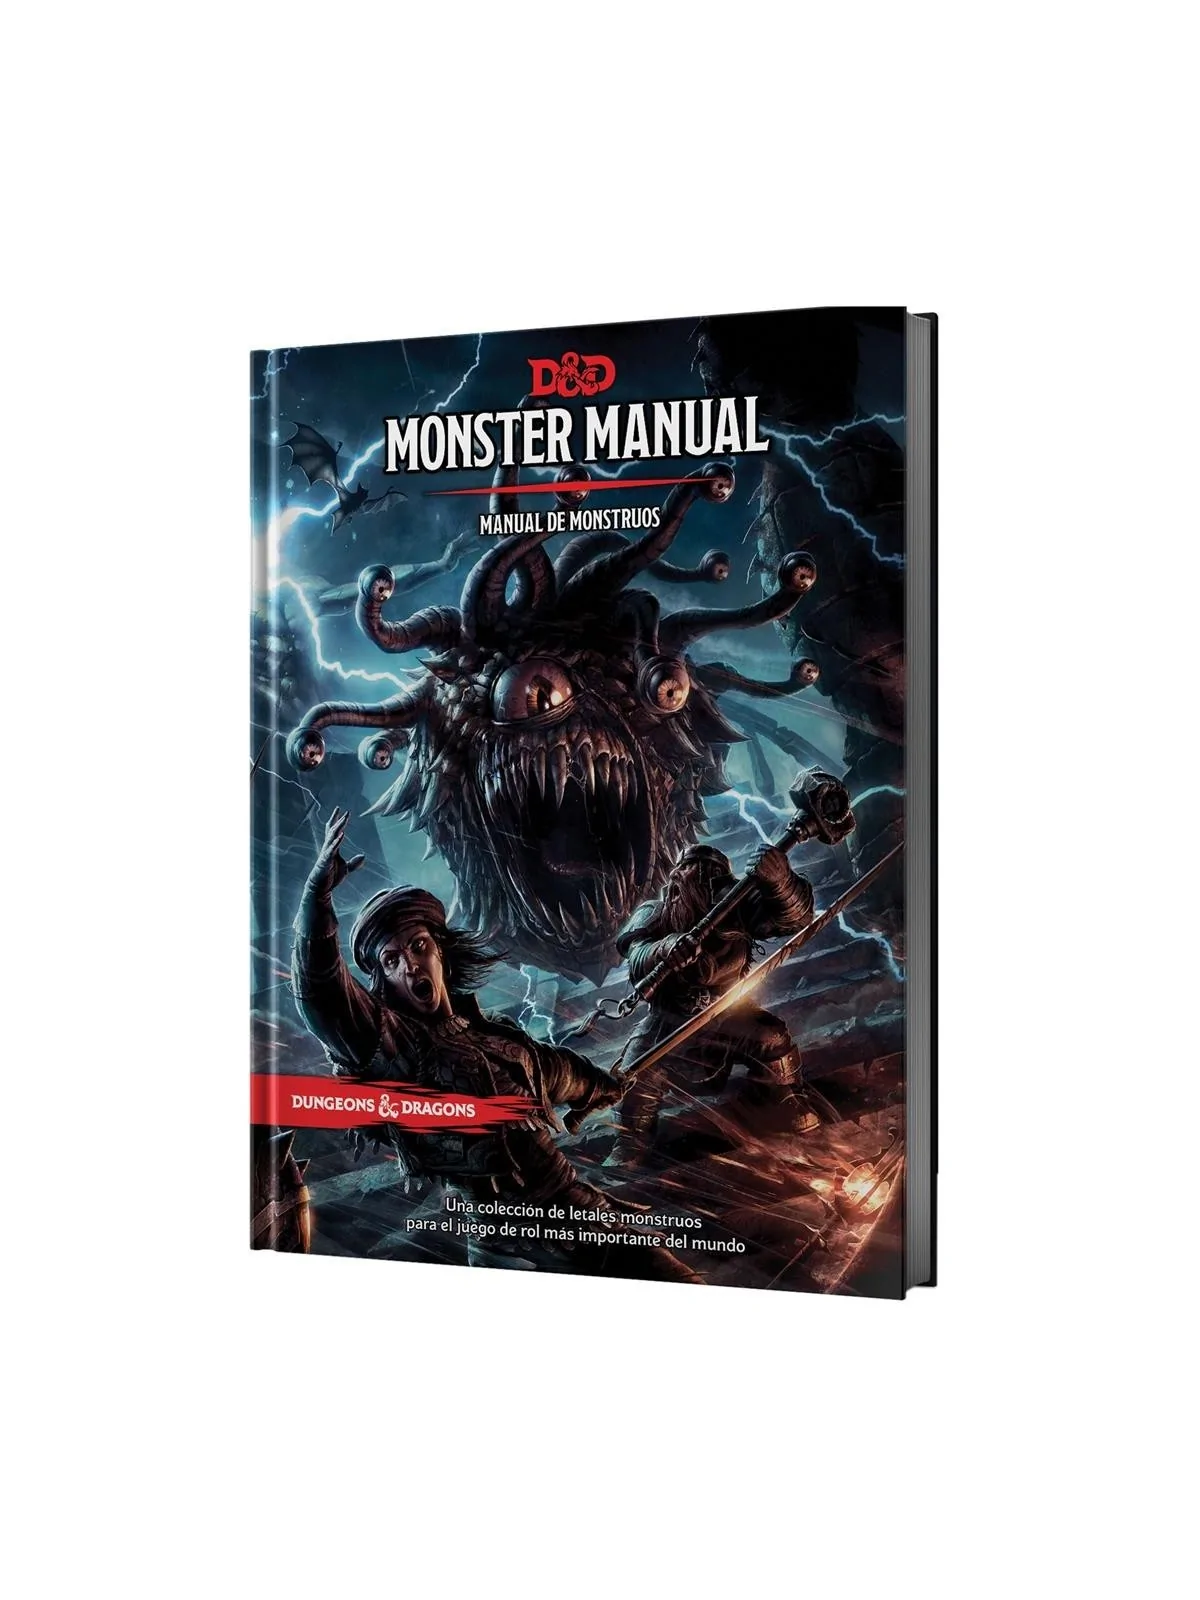 Comprar D&D Monster Manual (Manual de Monstruos) barato al mejor preci